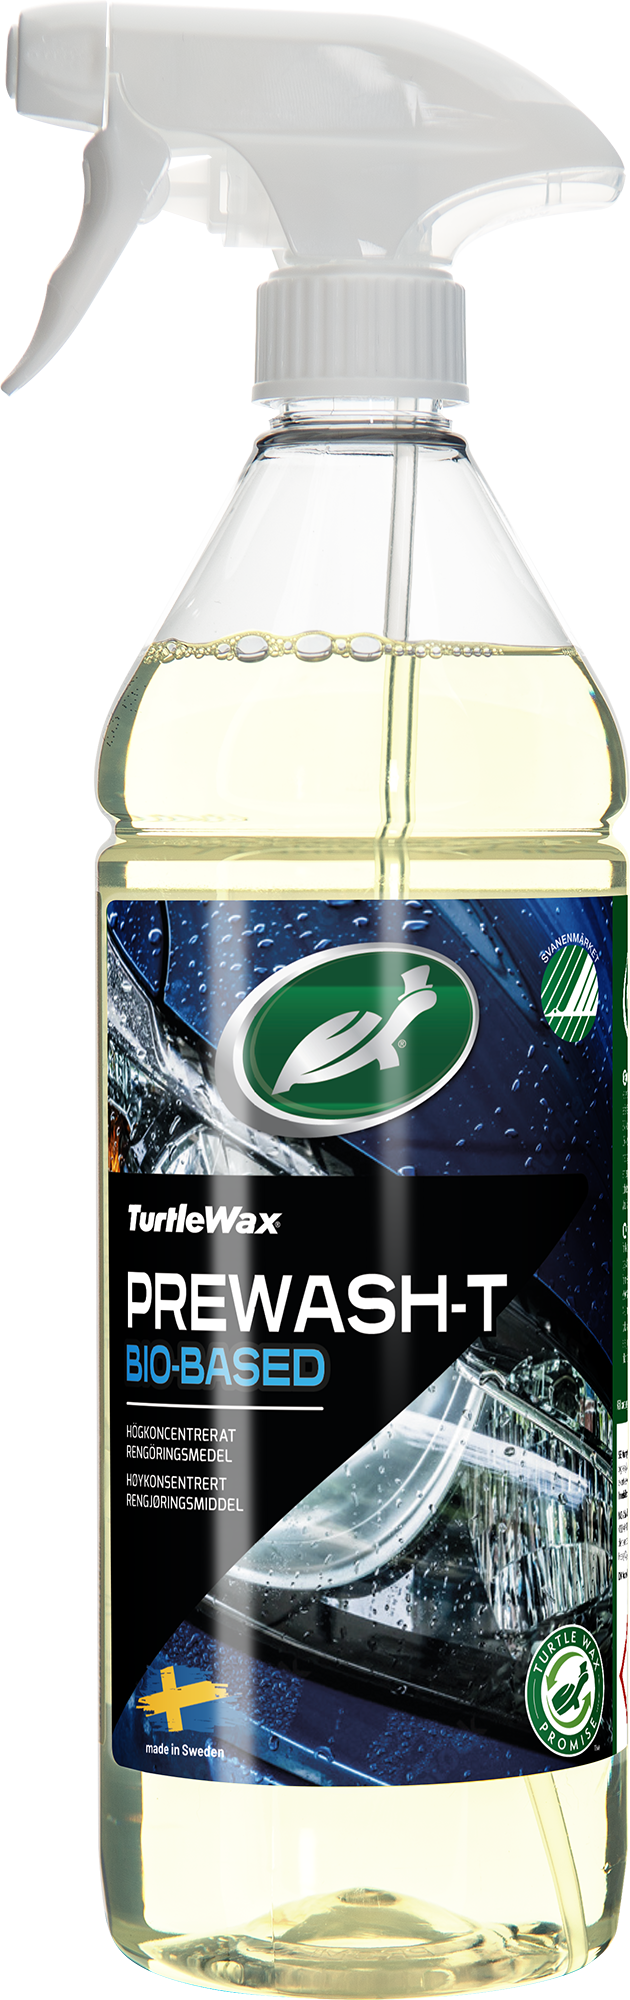 Turtle Wax - Prewash-T Bio-Based.png